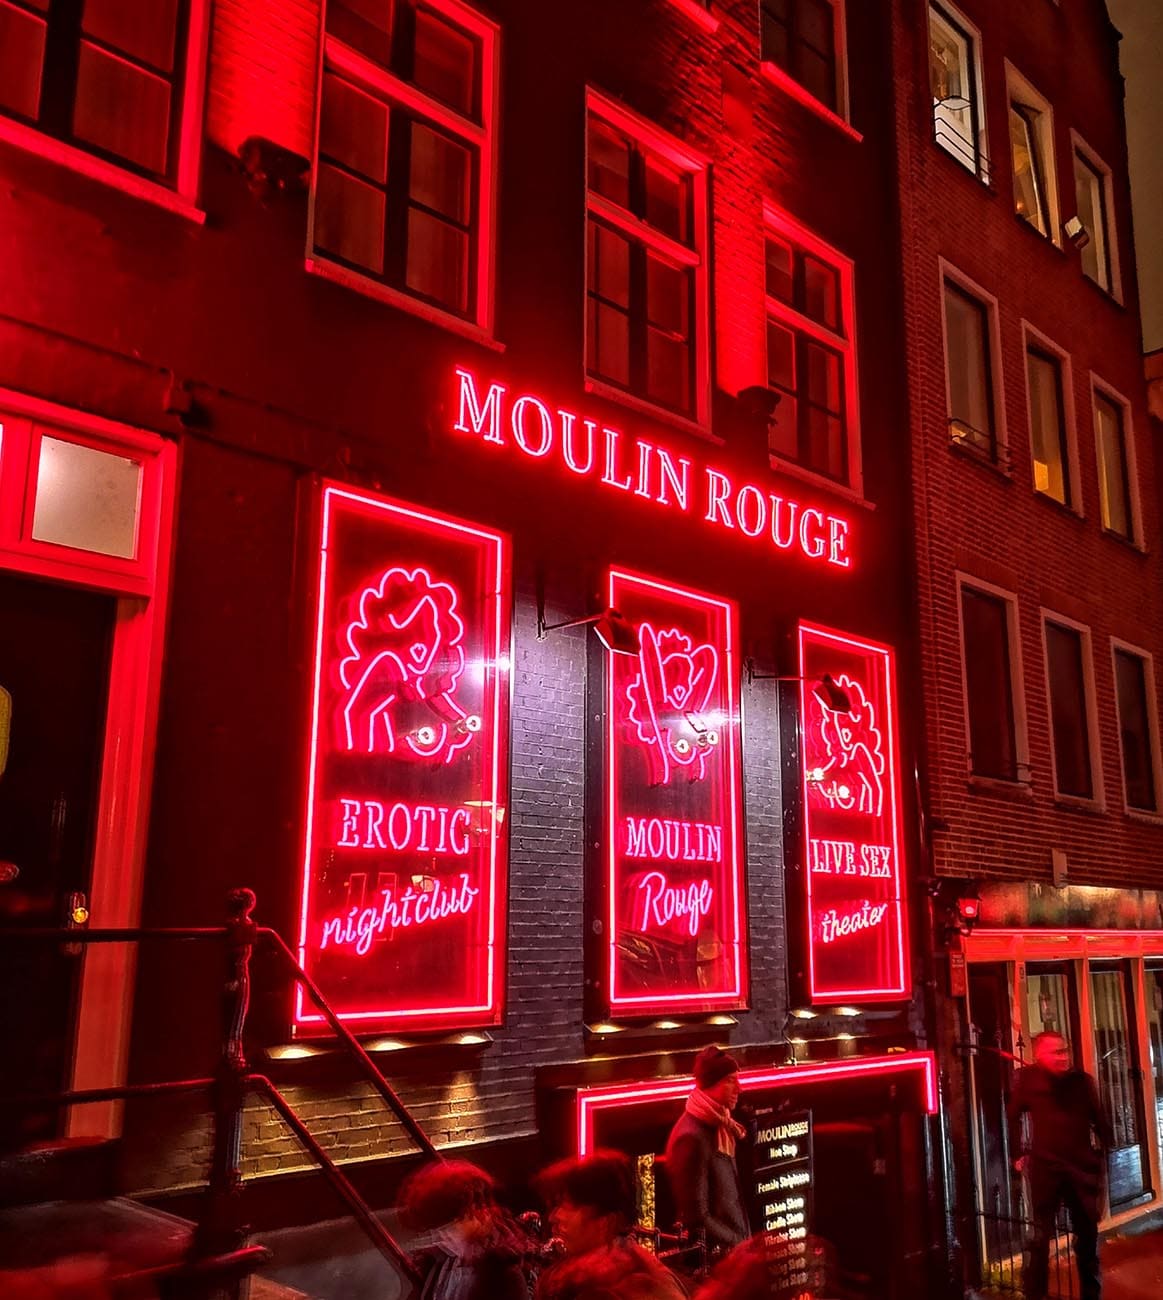 Moulin Rouge in Cartierul Rosu